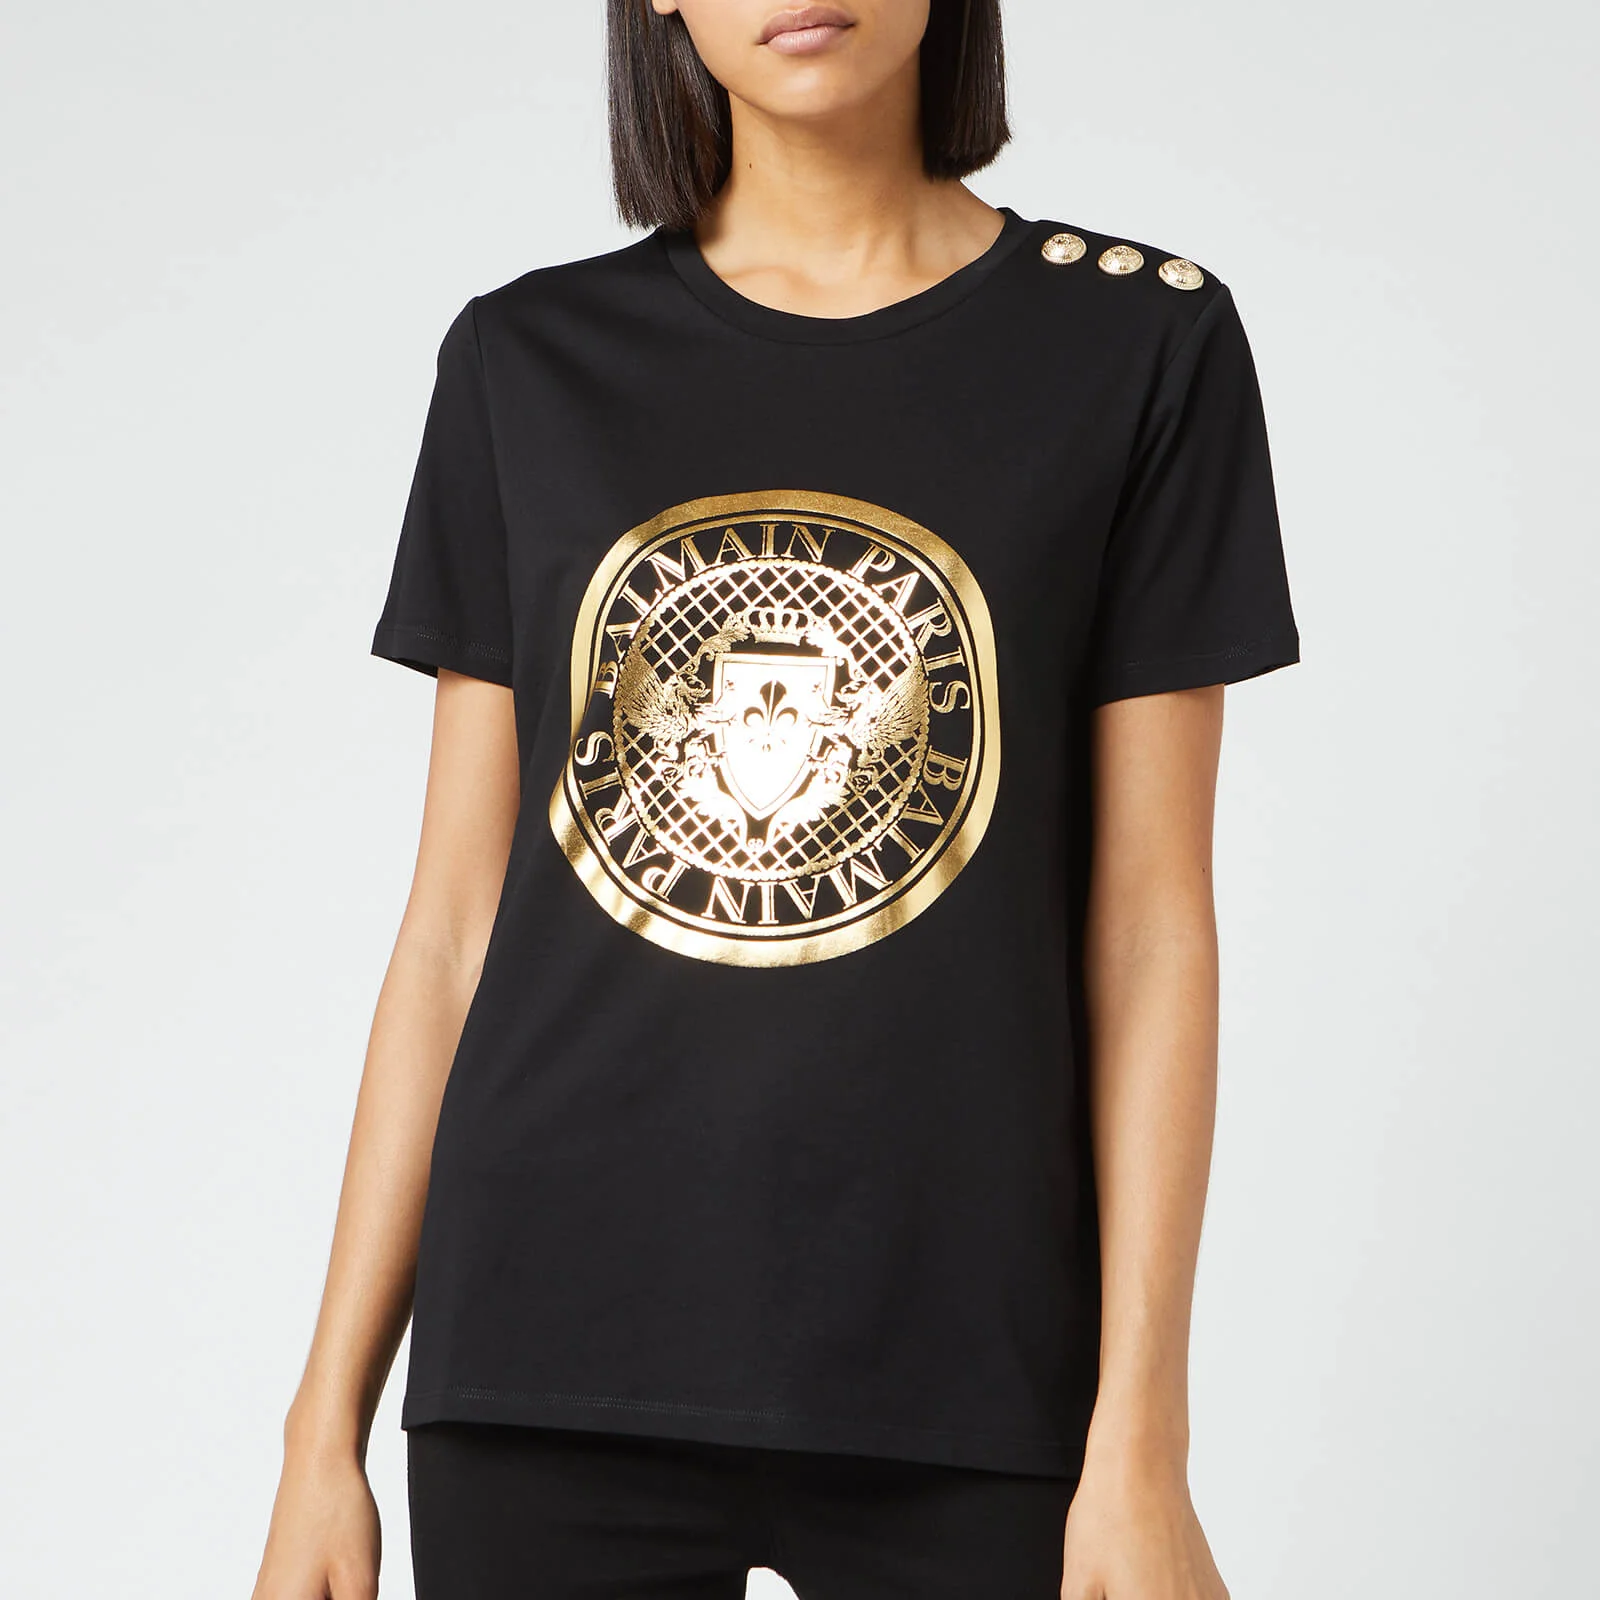 Balmain Women's Coin T-Shirt - Black Image 1